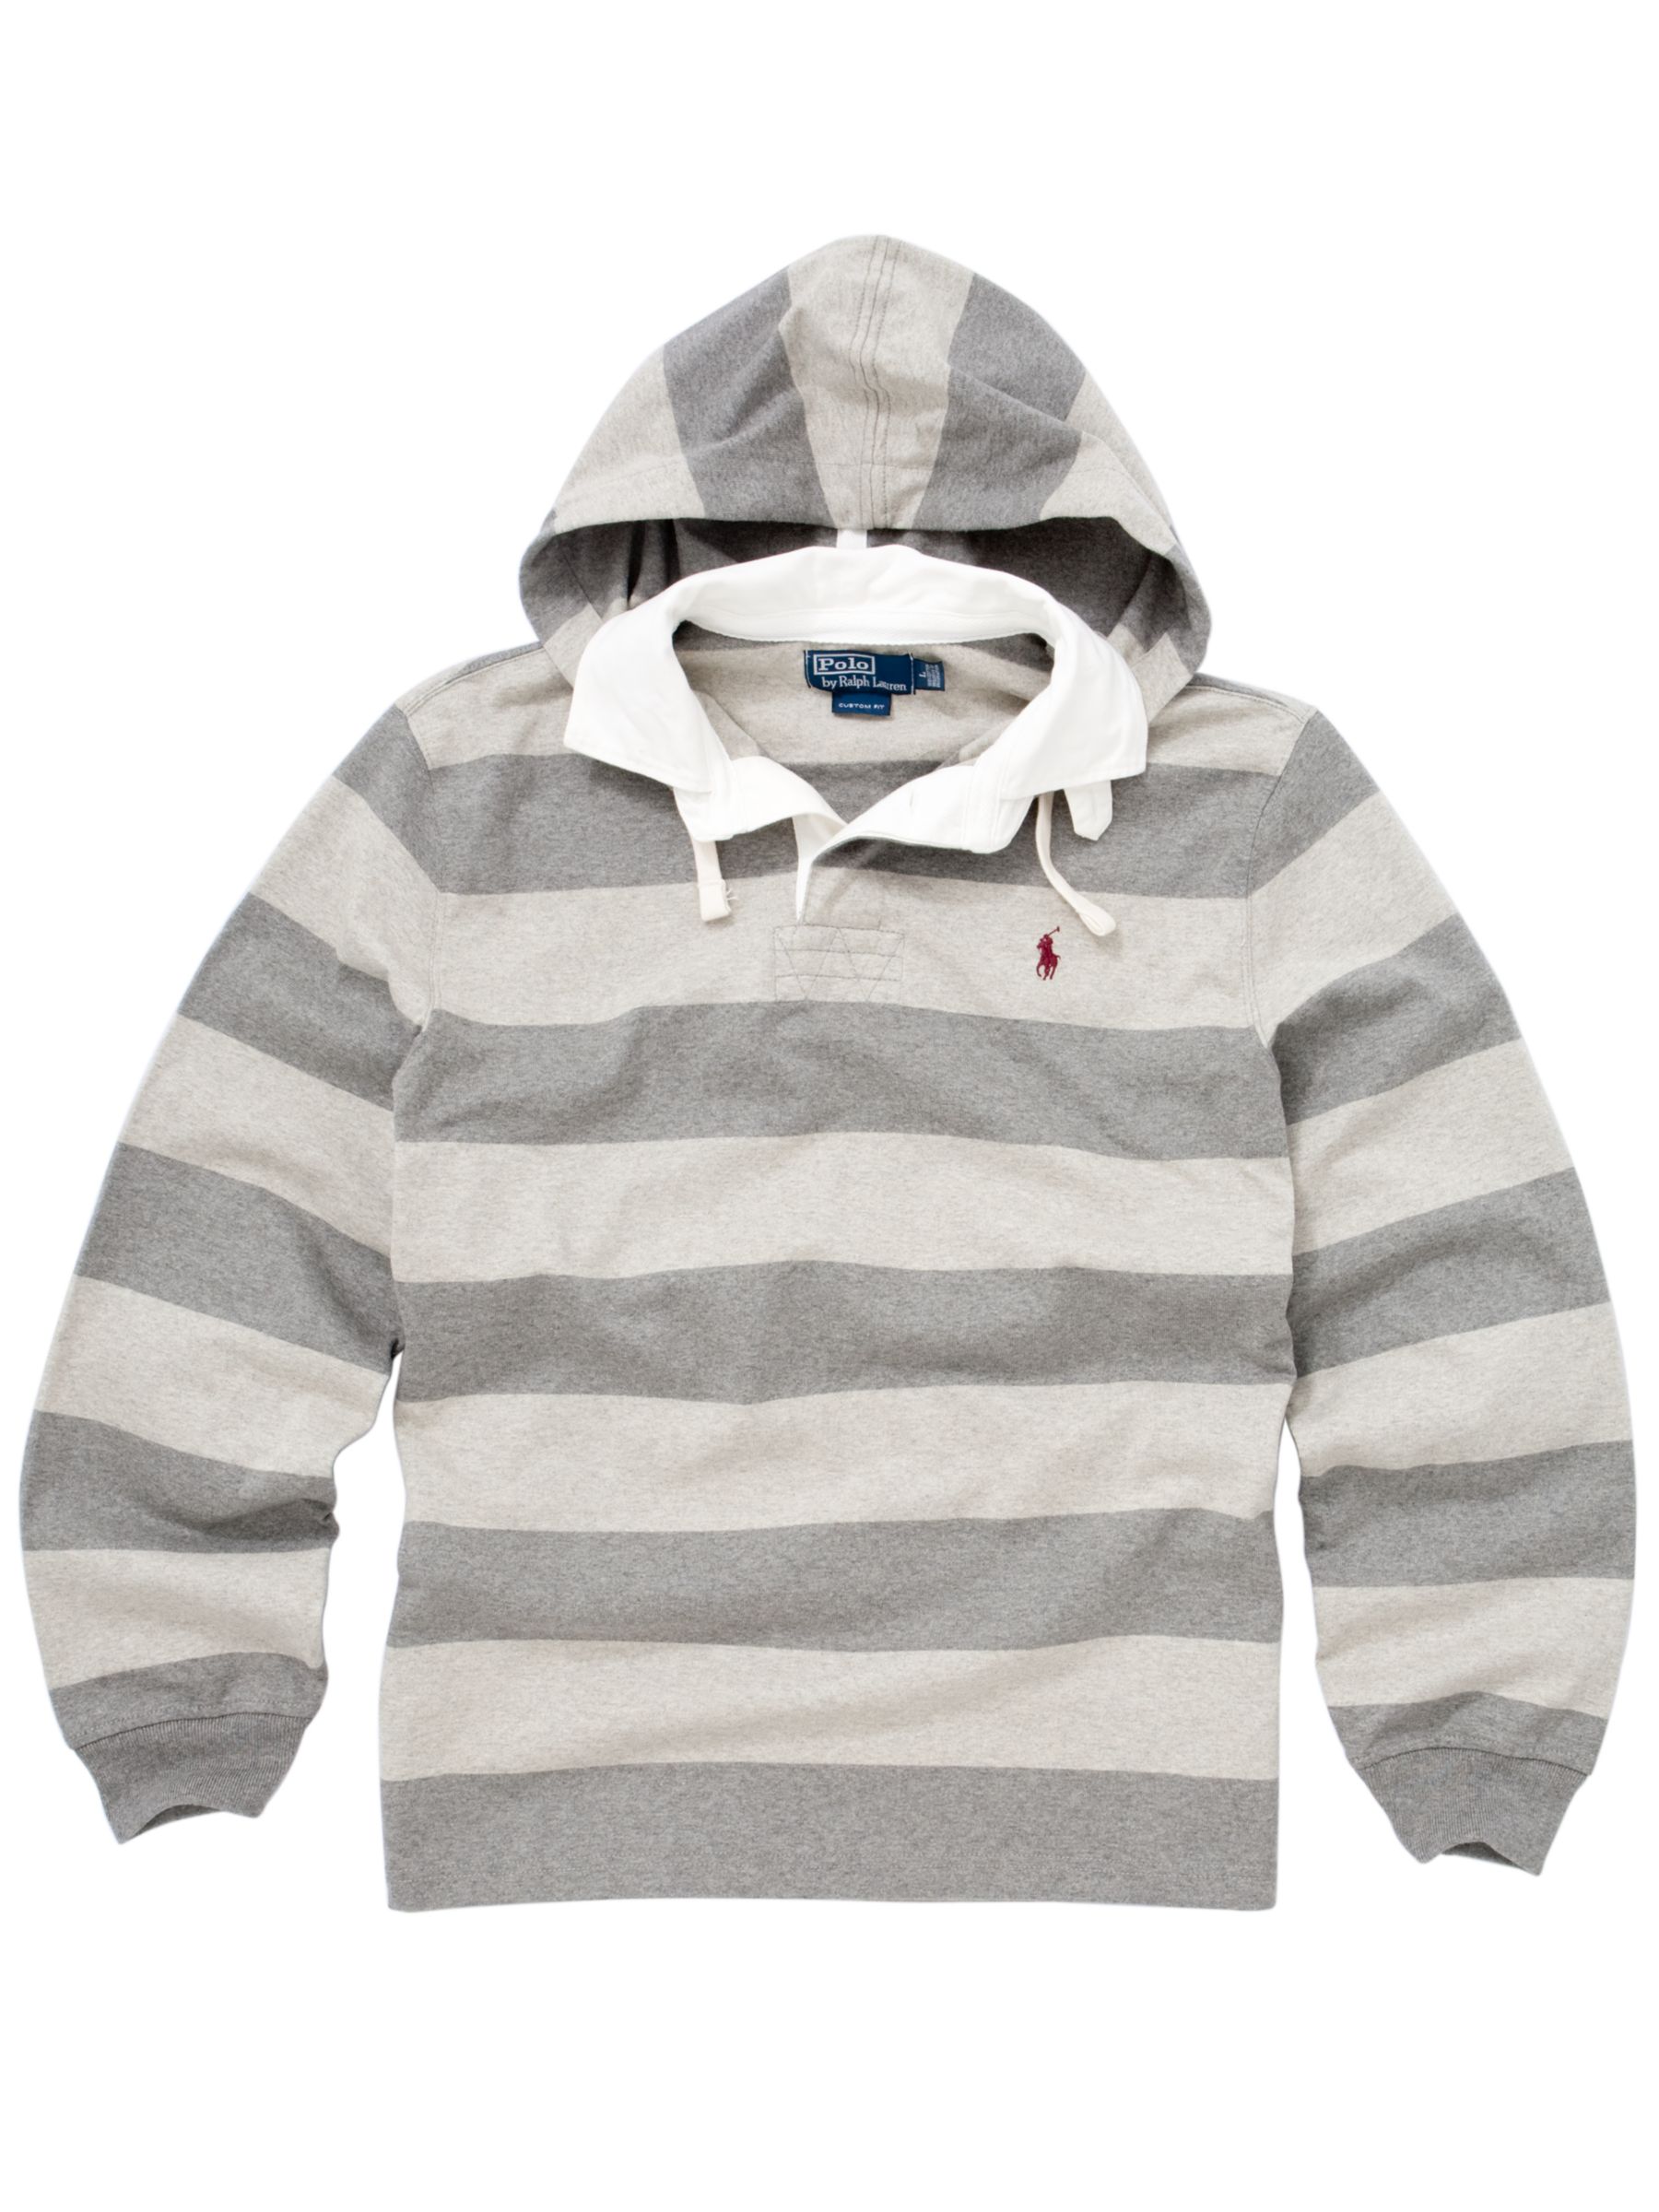 Polo Ralph Lauren Rugby Shirt Hoodie, Grey